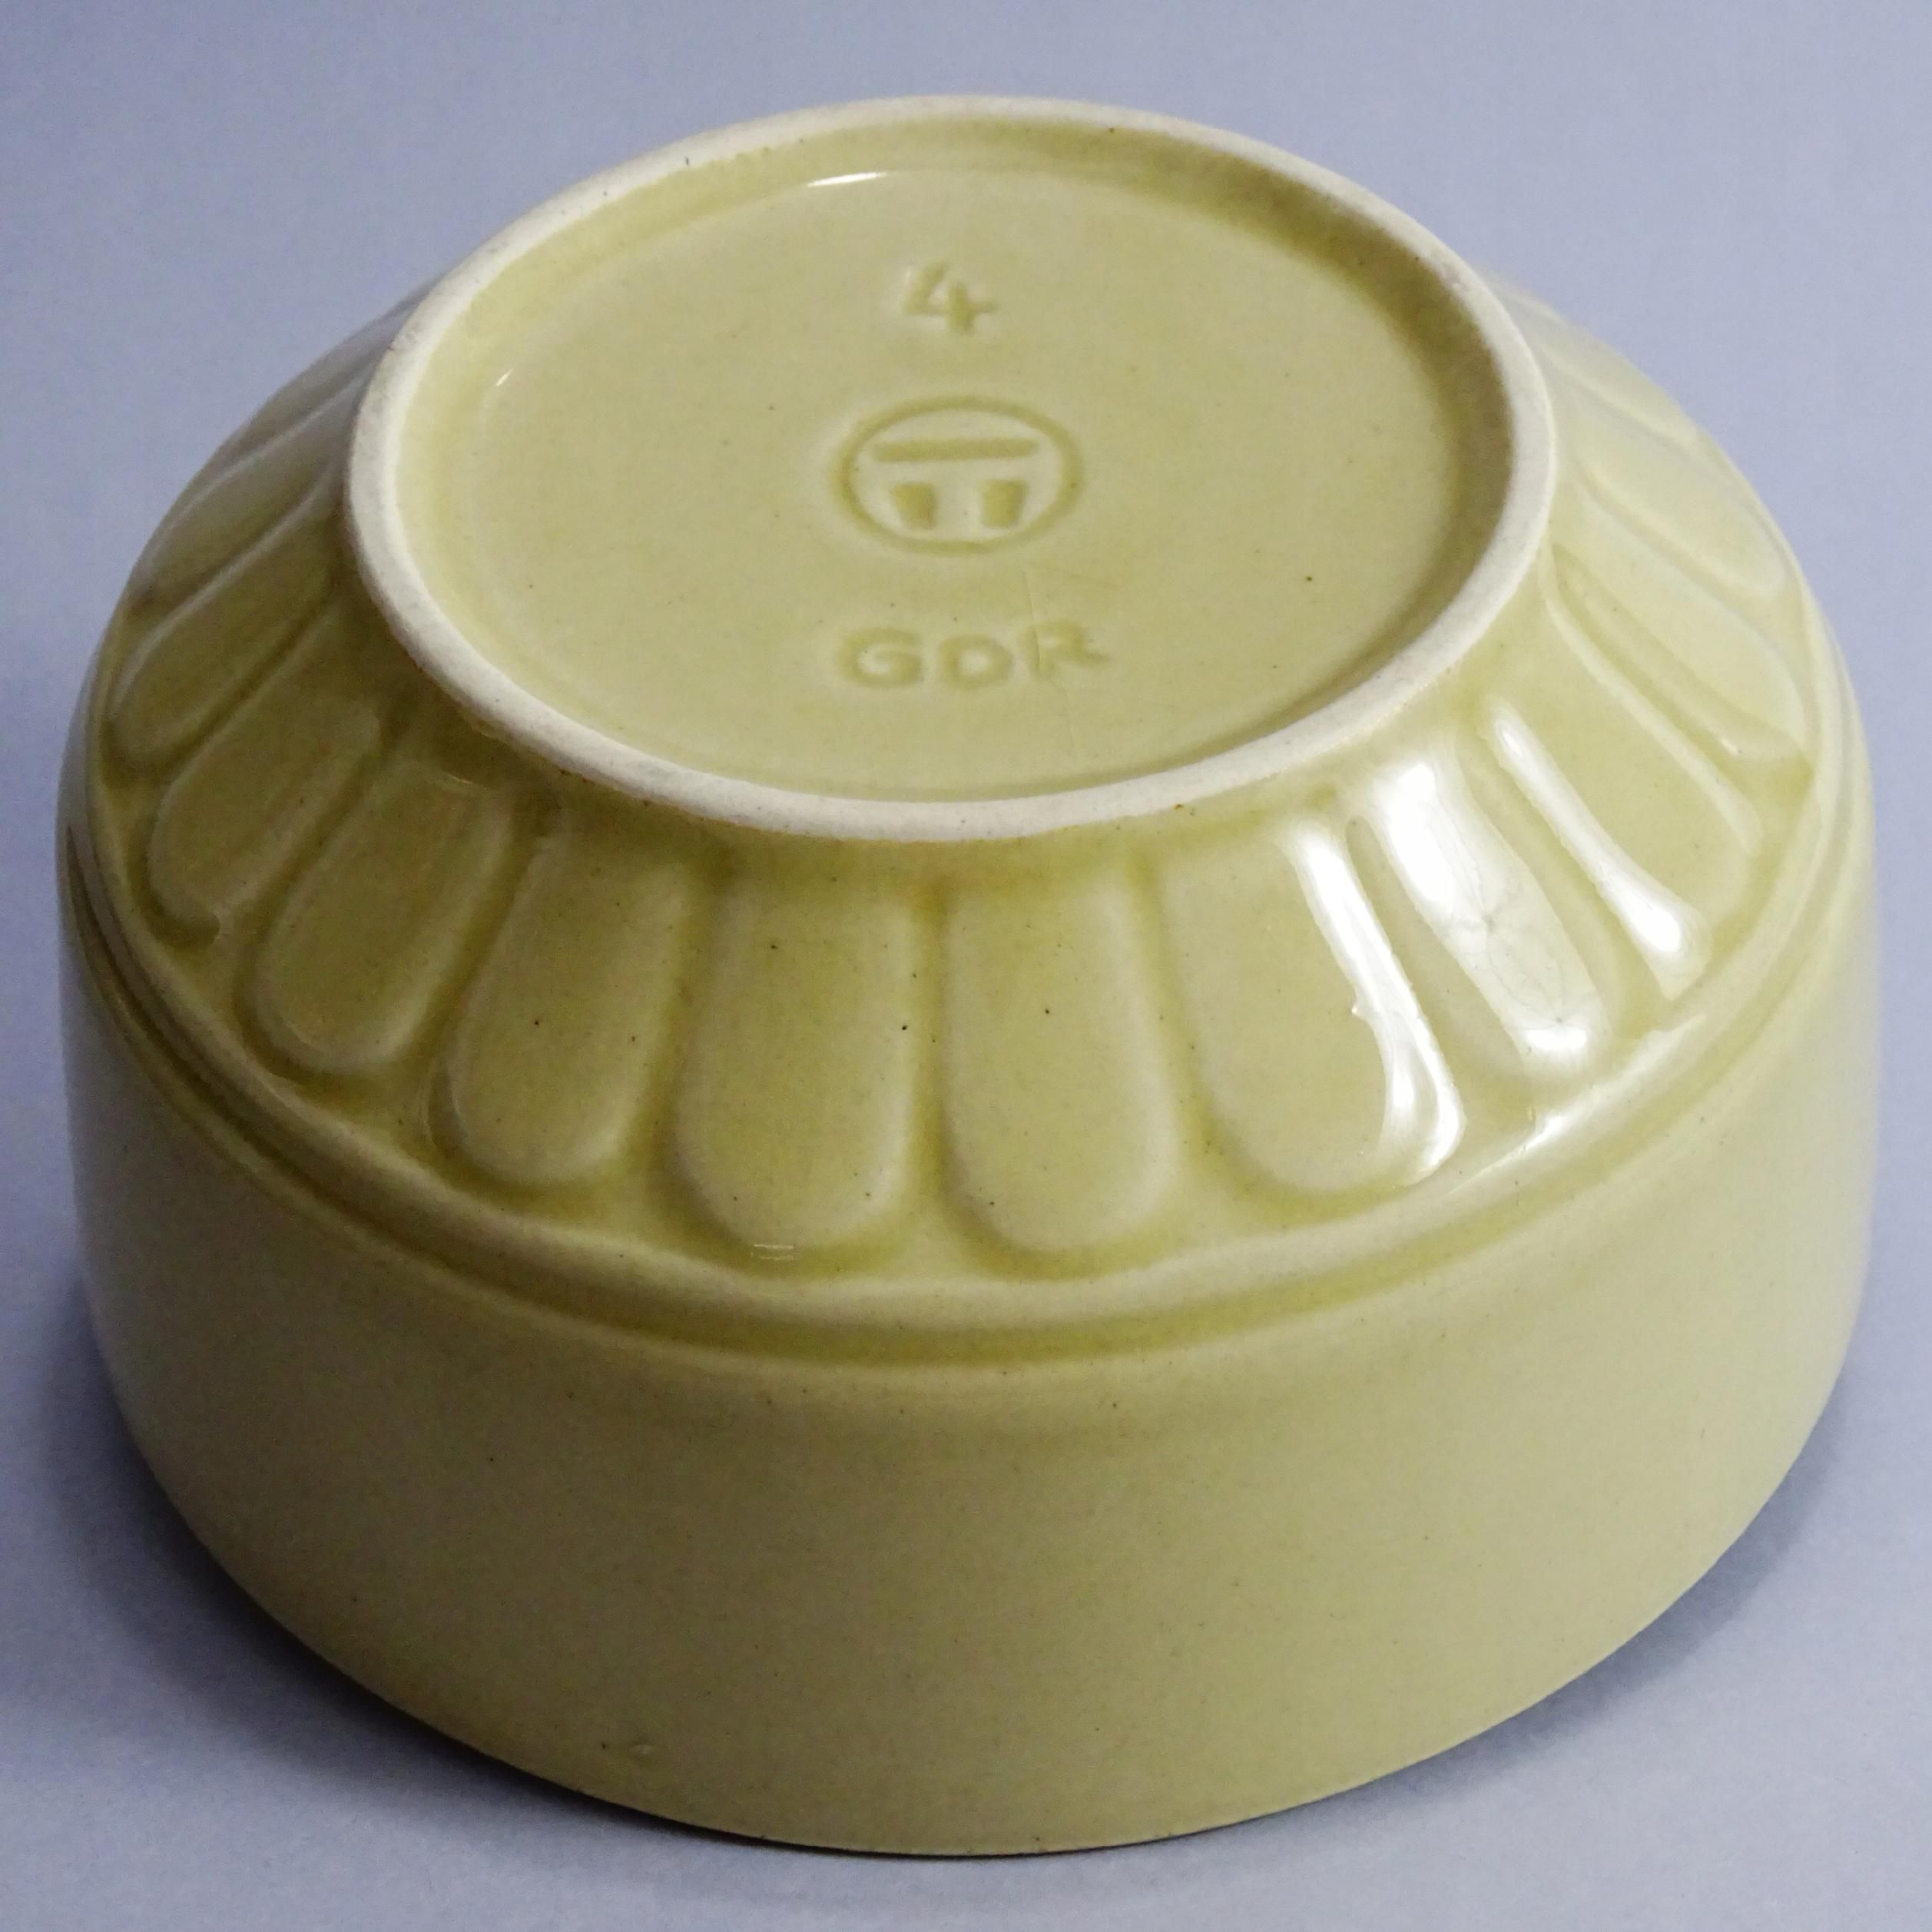 torgau lata 60/70 piękna kremowa ceramiczna misa salaterka patera